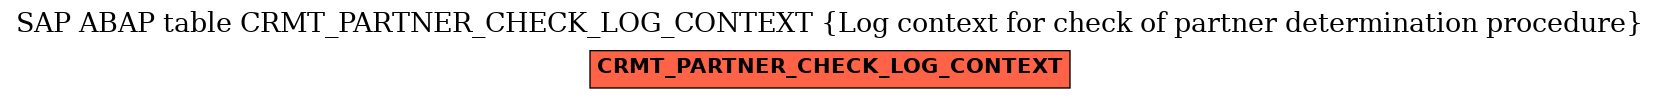 E-R Diagram for table CRMT_PARTNER_CHECK_LOG_CONTEXT (Log context for check of partner determination procedure)